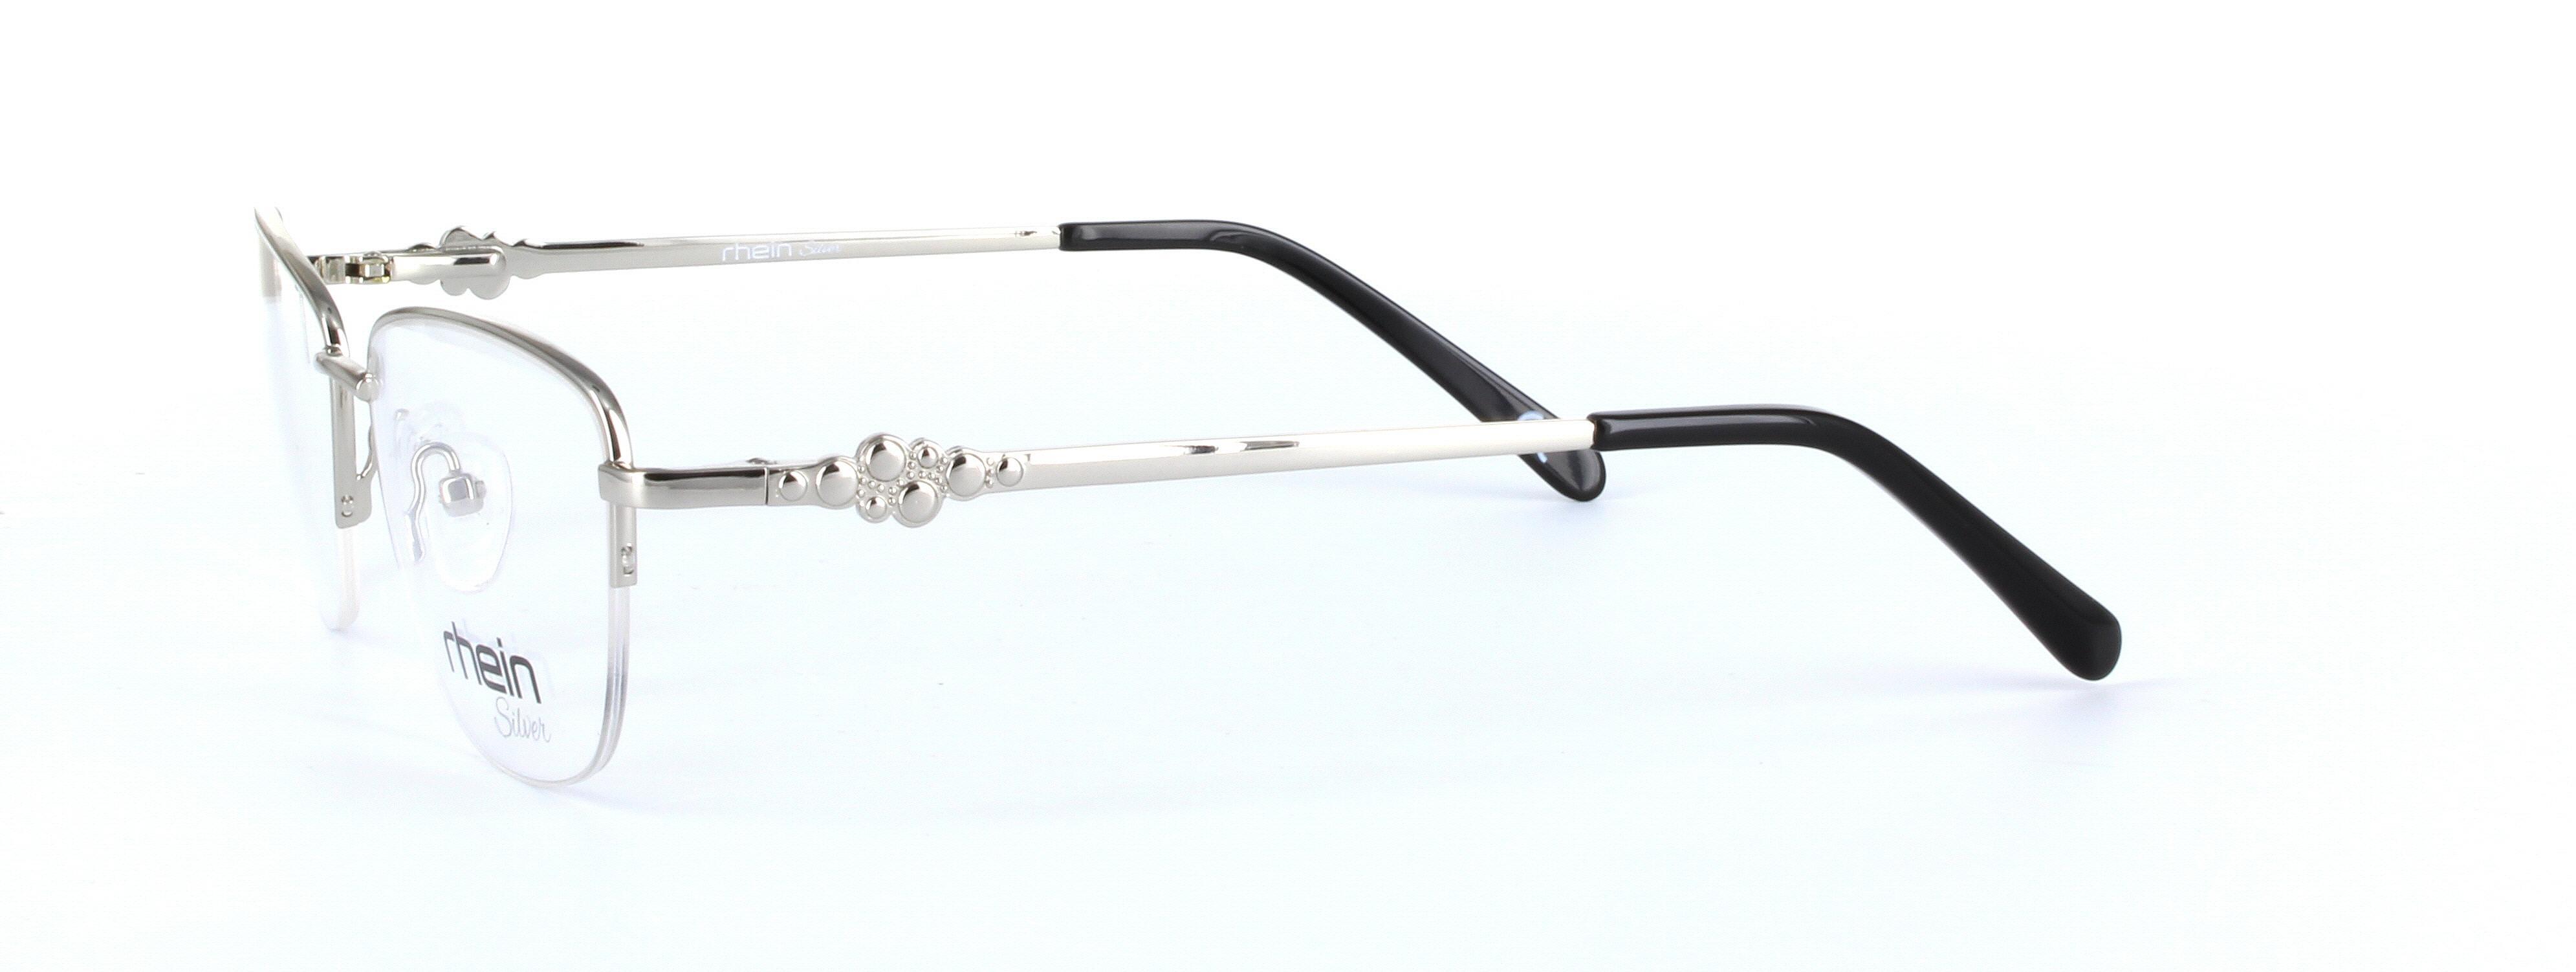 Alhambra Silver Semi Rimless Rectangular Metal Glasses - Image View 2